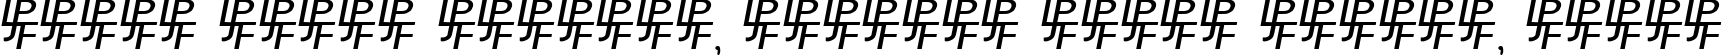 Пример написания шрифтом Peake Doubled текста на белорусском